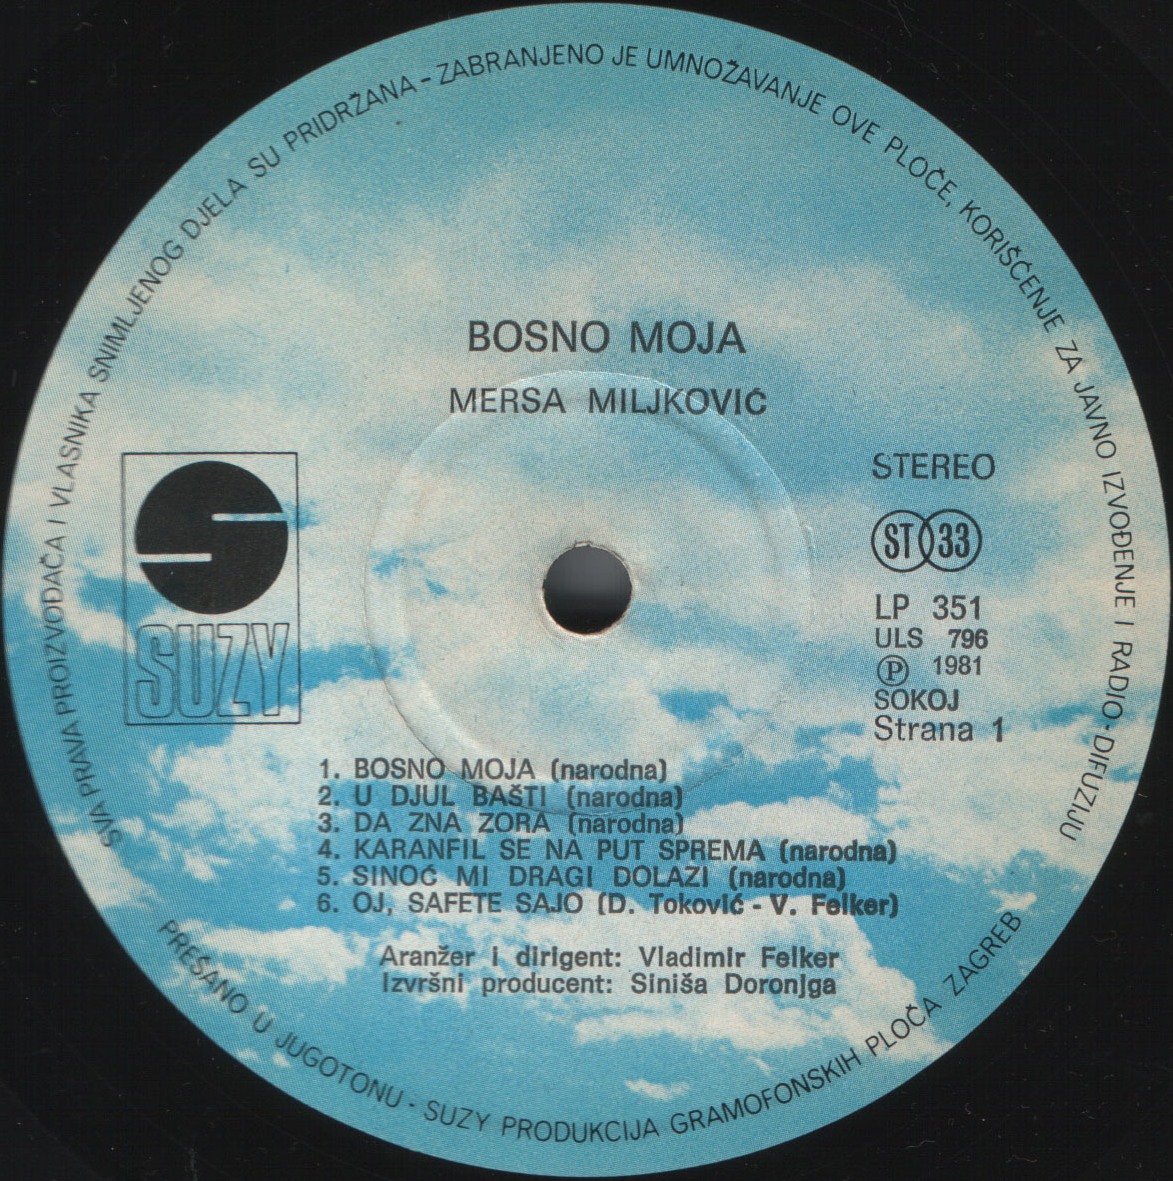 Mersa Miljkovic 1981 A